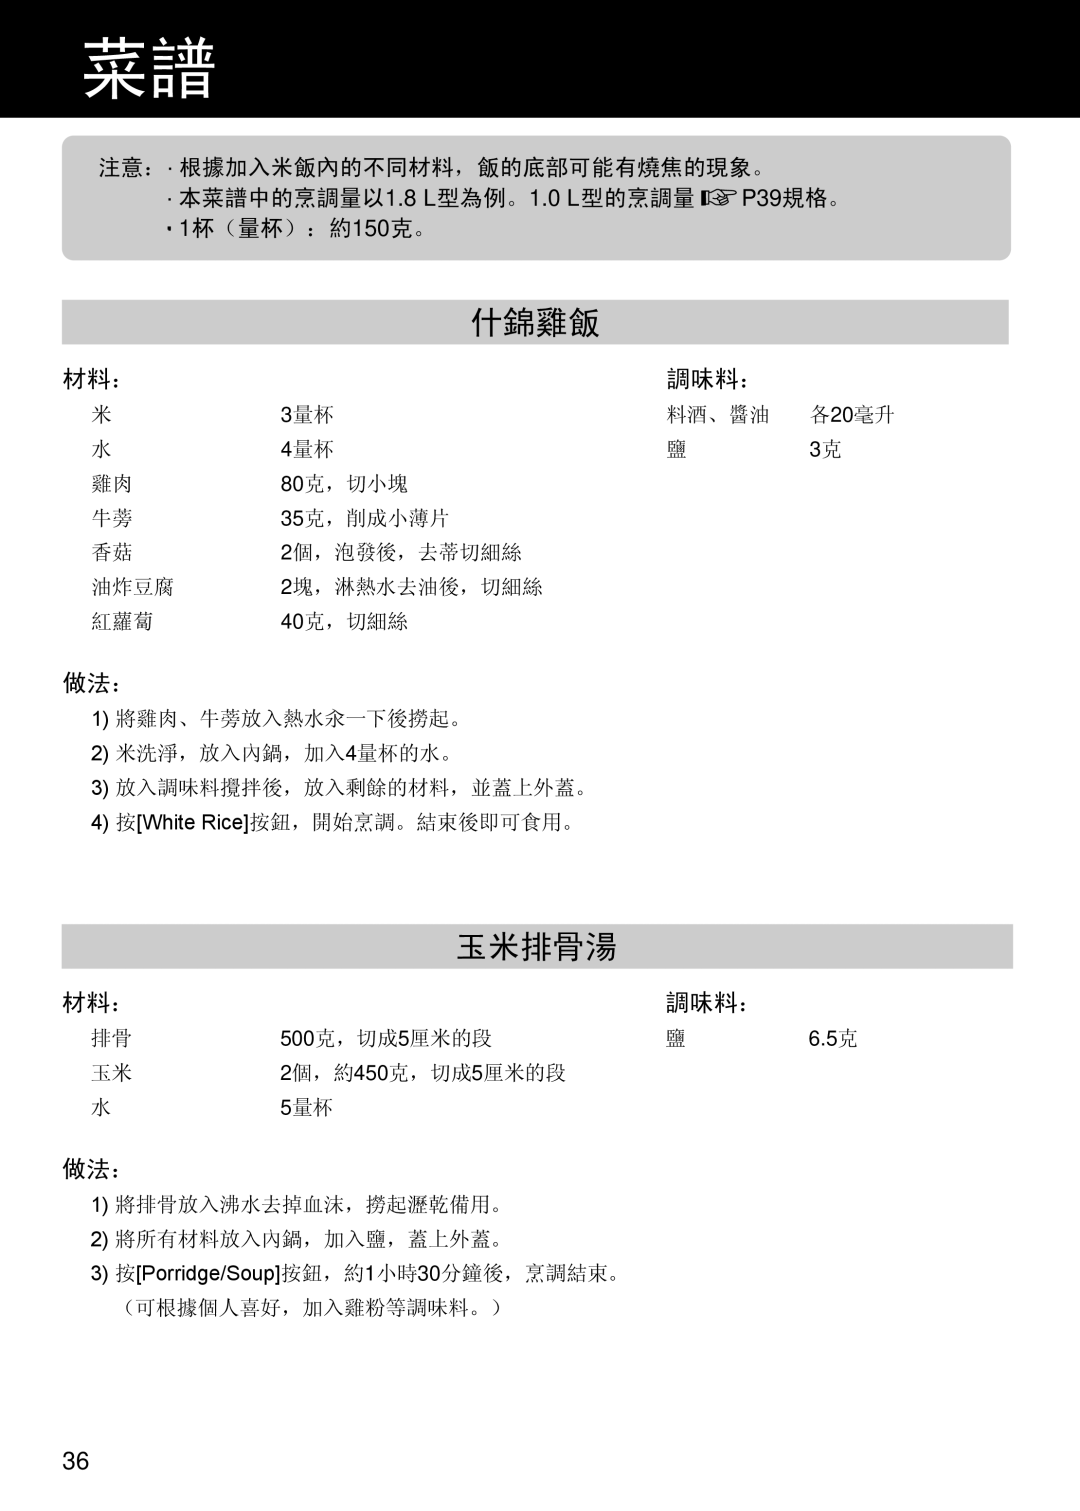 Panasonic SR/DF181 specifications 什錦雞飯, 玉米排骨湯, 調味料： 